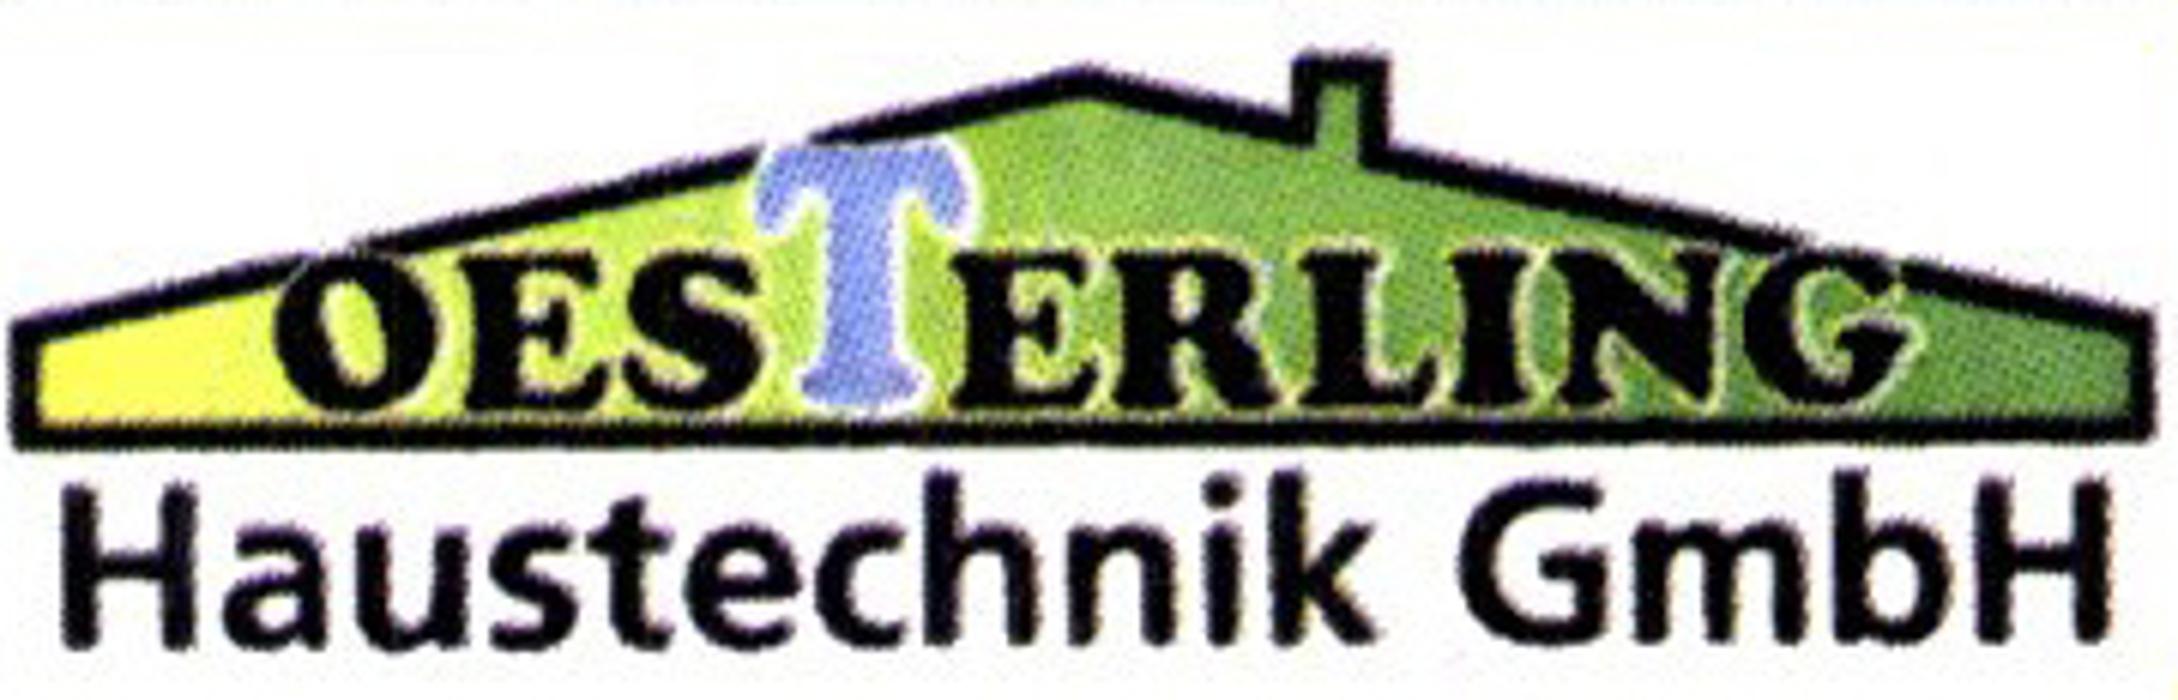 Oesterling Haustechnik GmbH - Heizsysteme